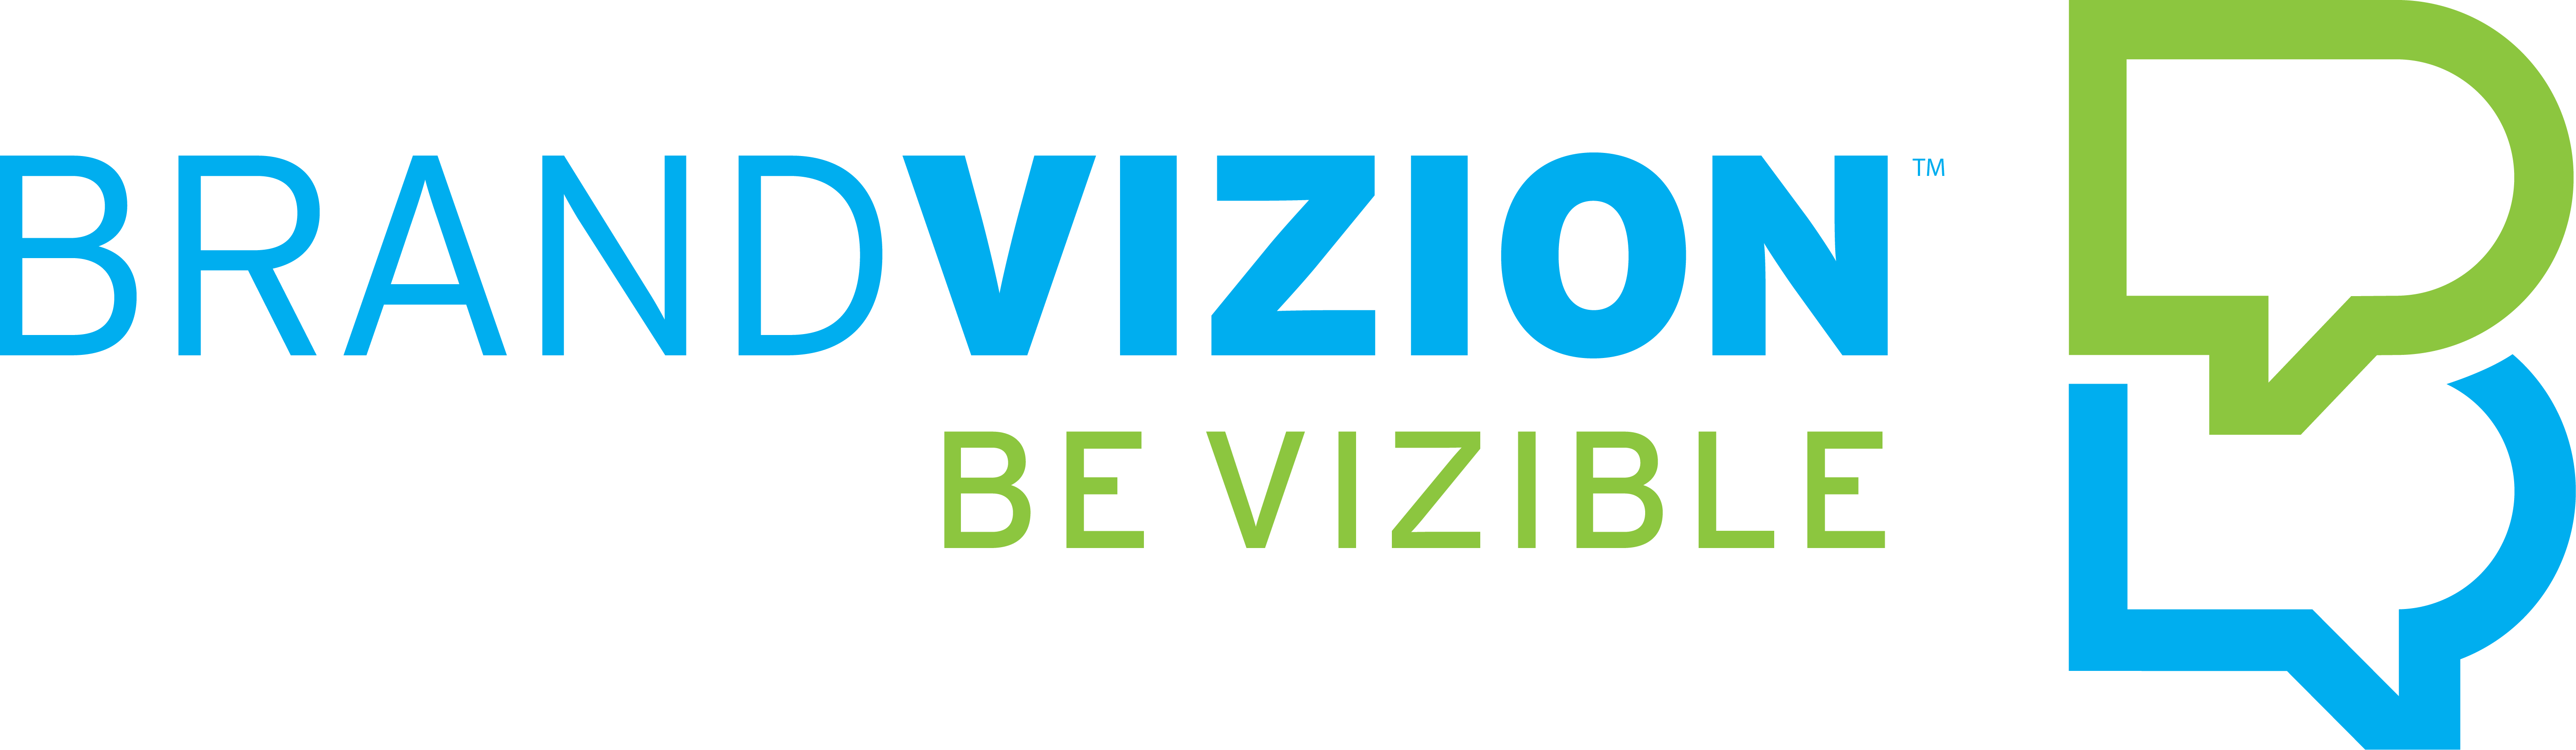 brand vision logo